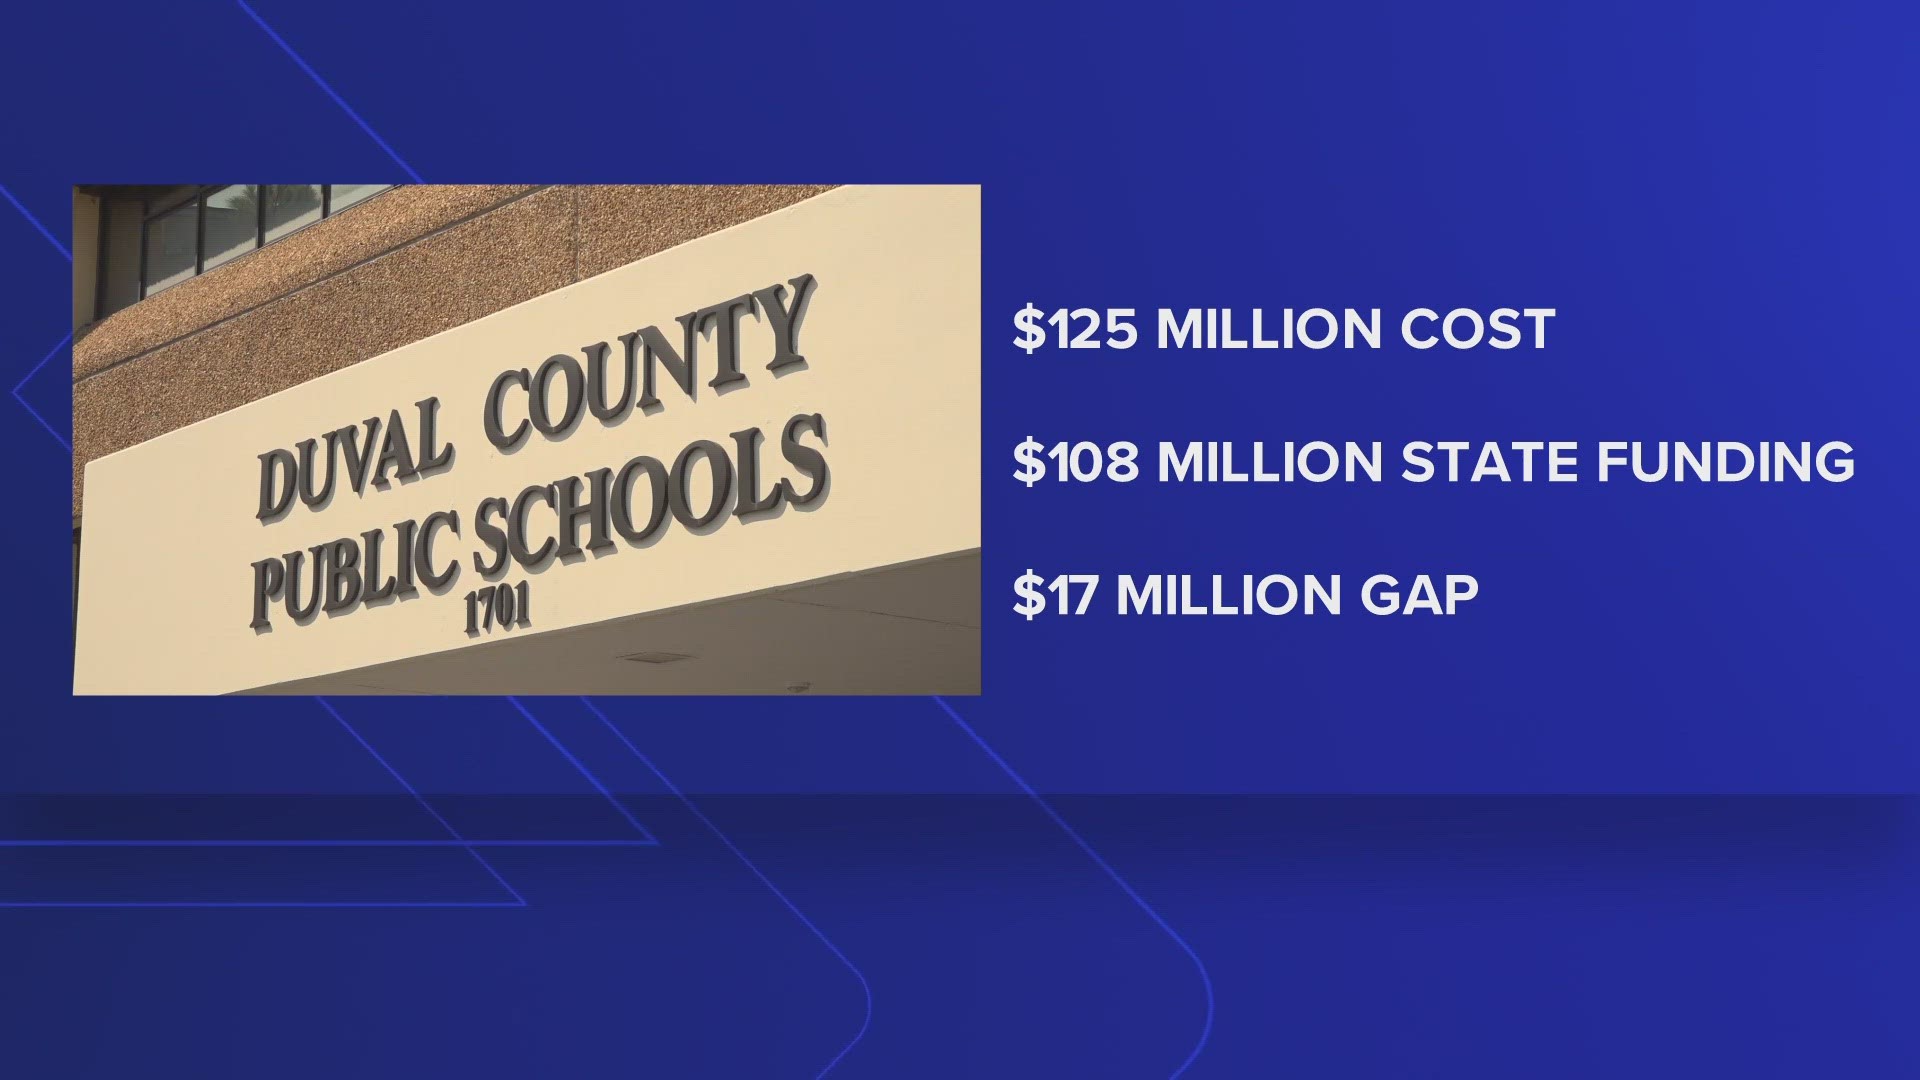 Florida voucher program leaves a $17 million gap in school funding